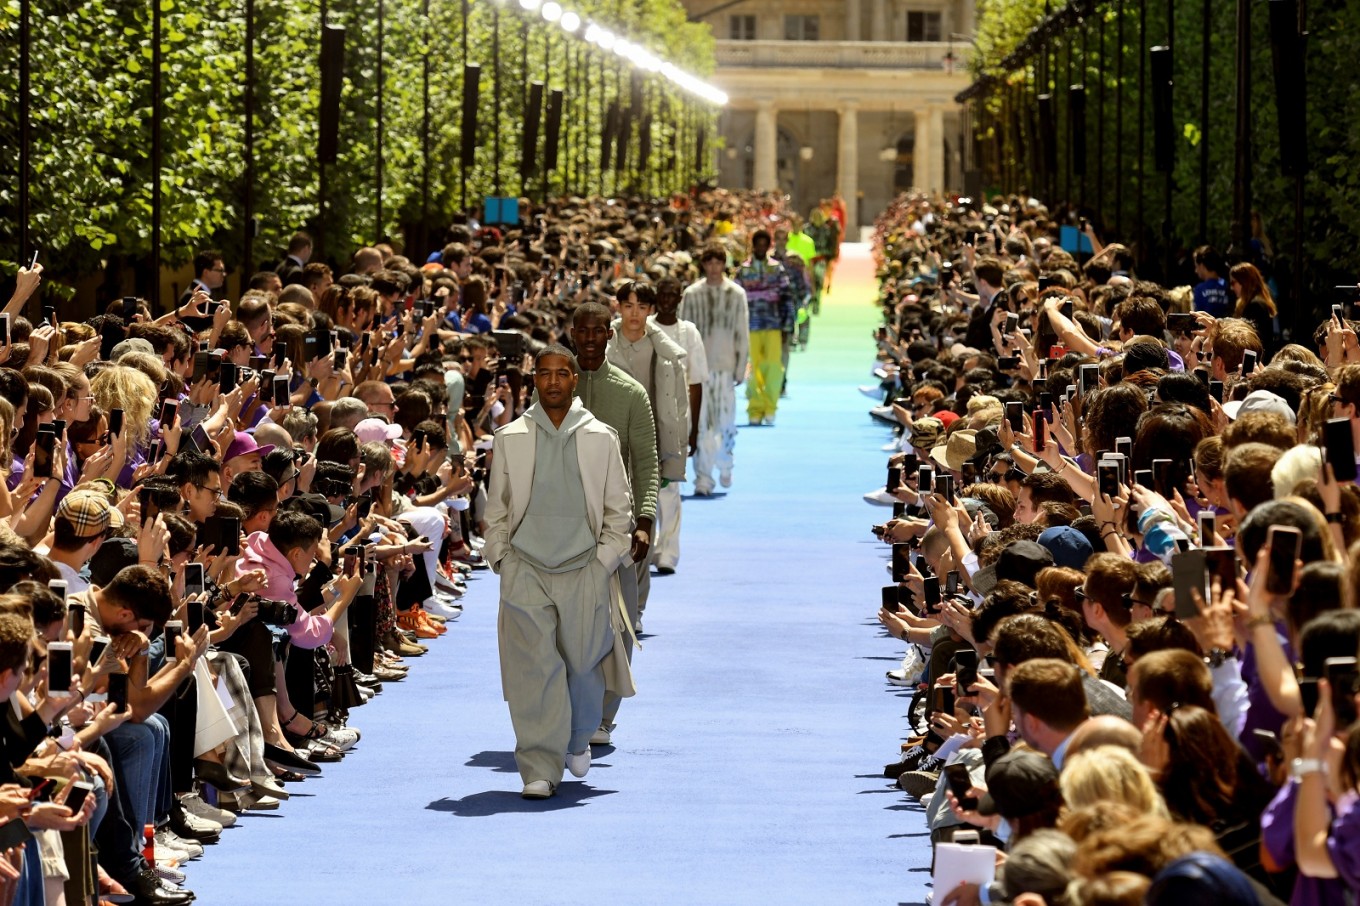 No hard feelings: Paris fashion star Abloh reaches out to Kanye